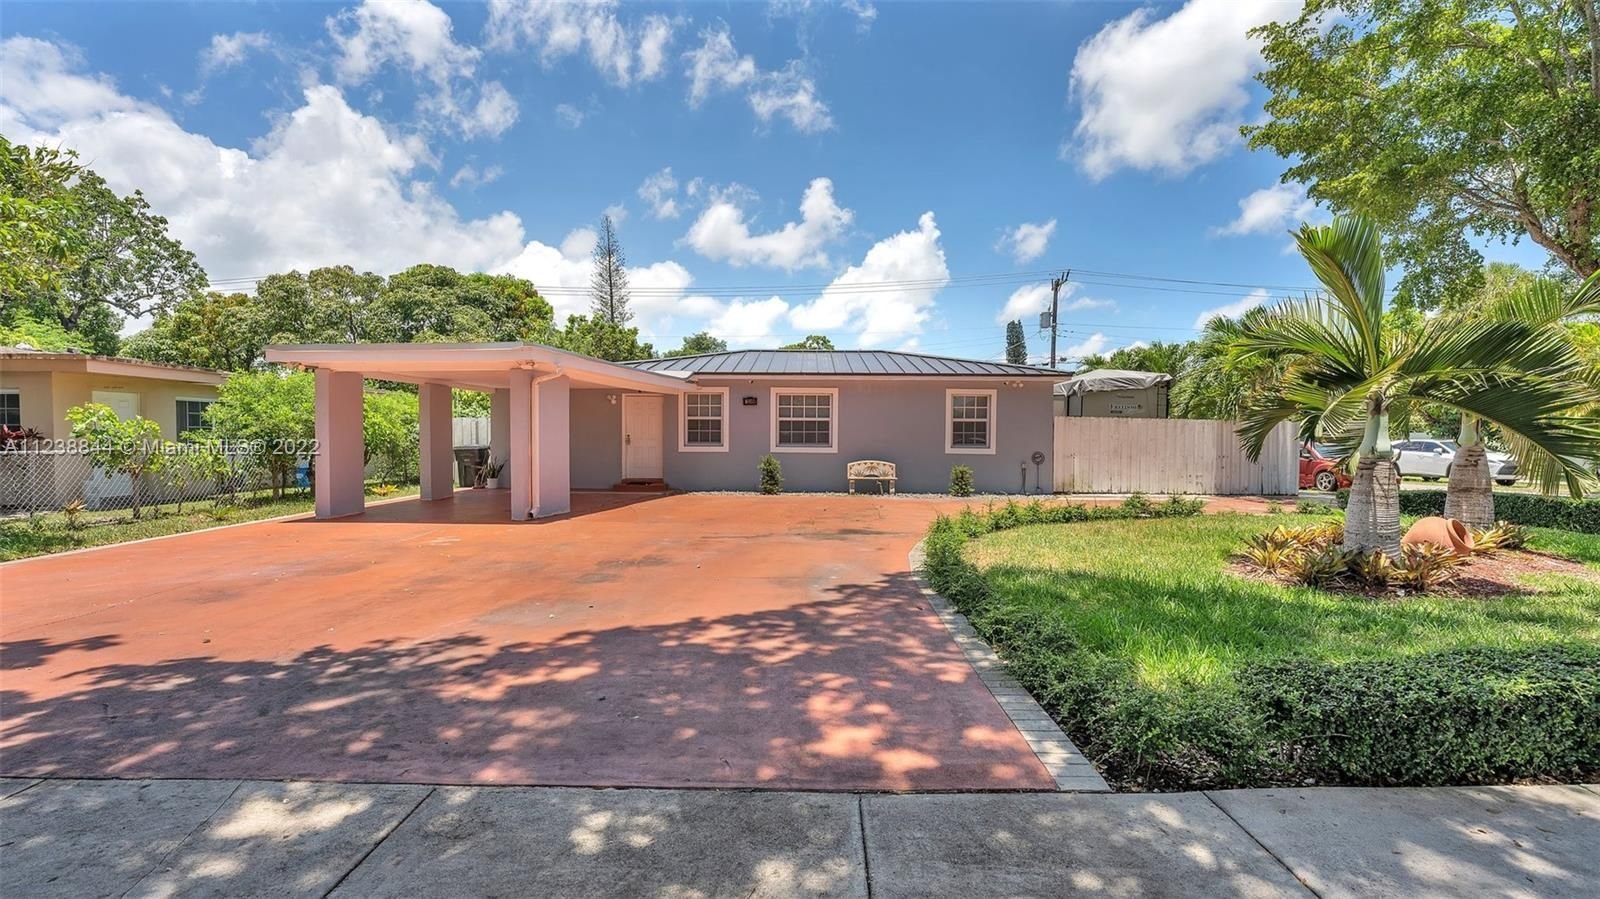 Real estate property located at 115 124th St, Miami-Dade County, North Miami, FL